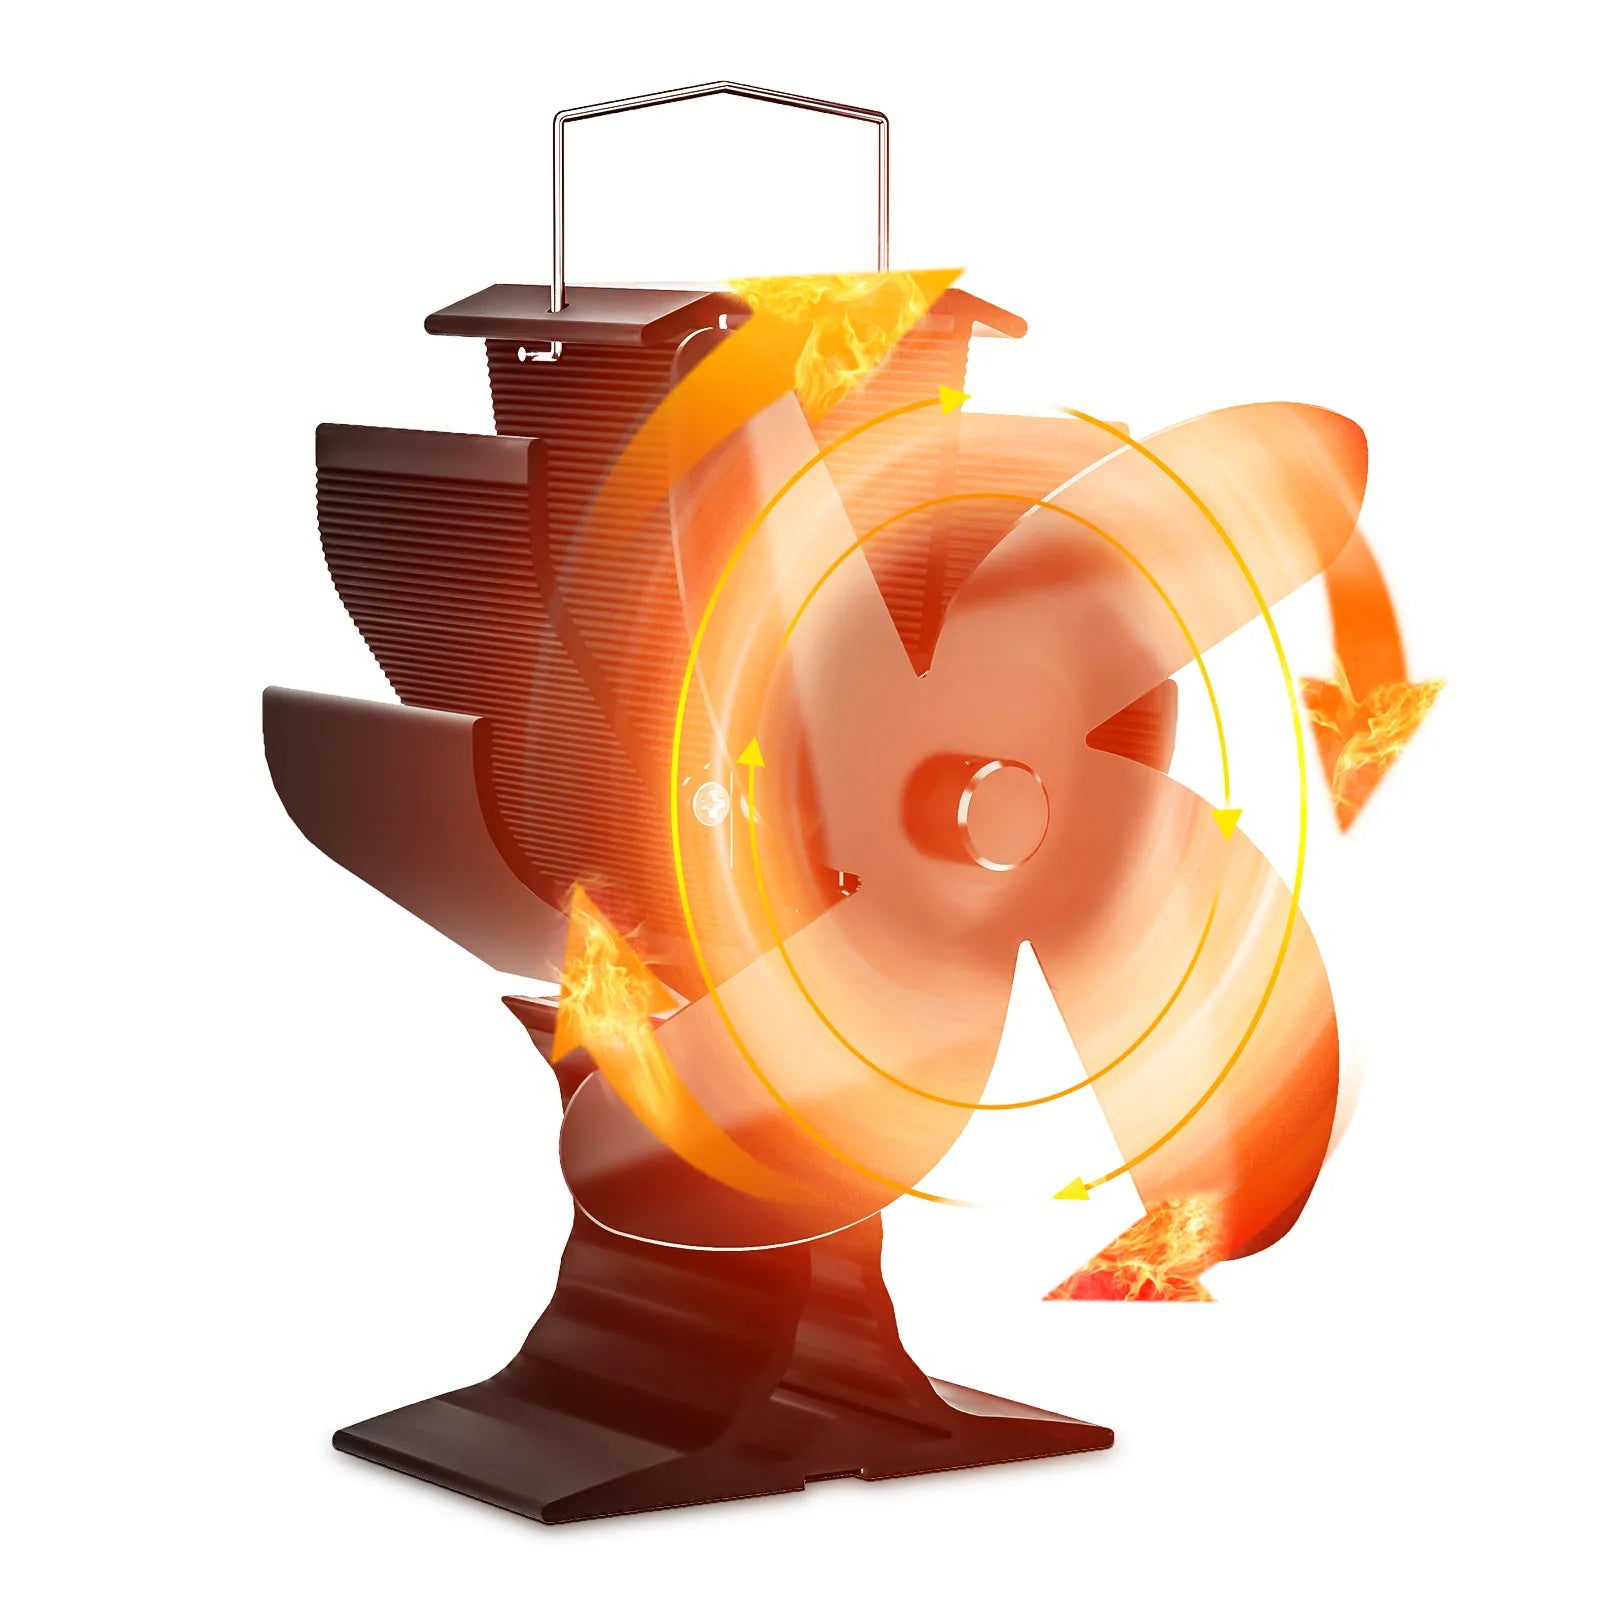 Best Heat Powered Stove Fan Blower for Wood/Log Burner/Fireplace – Signstek